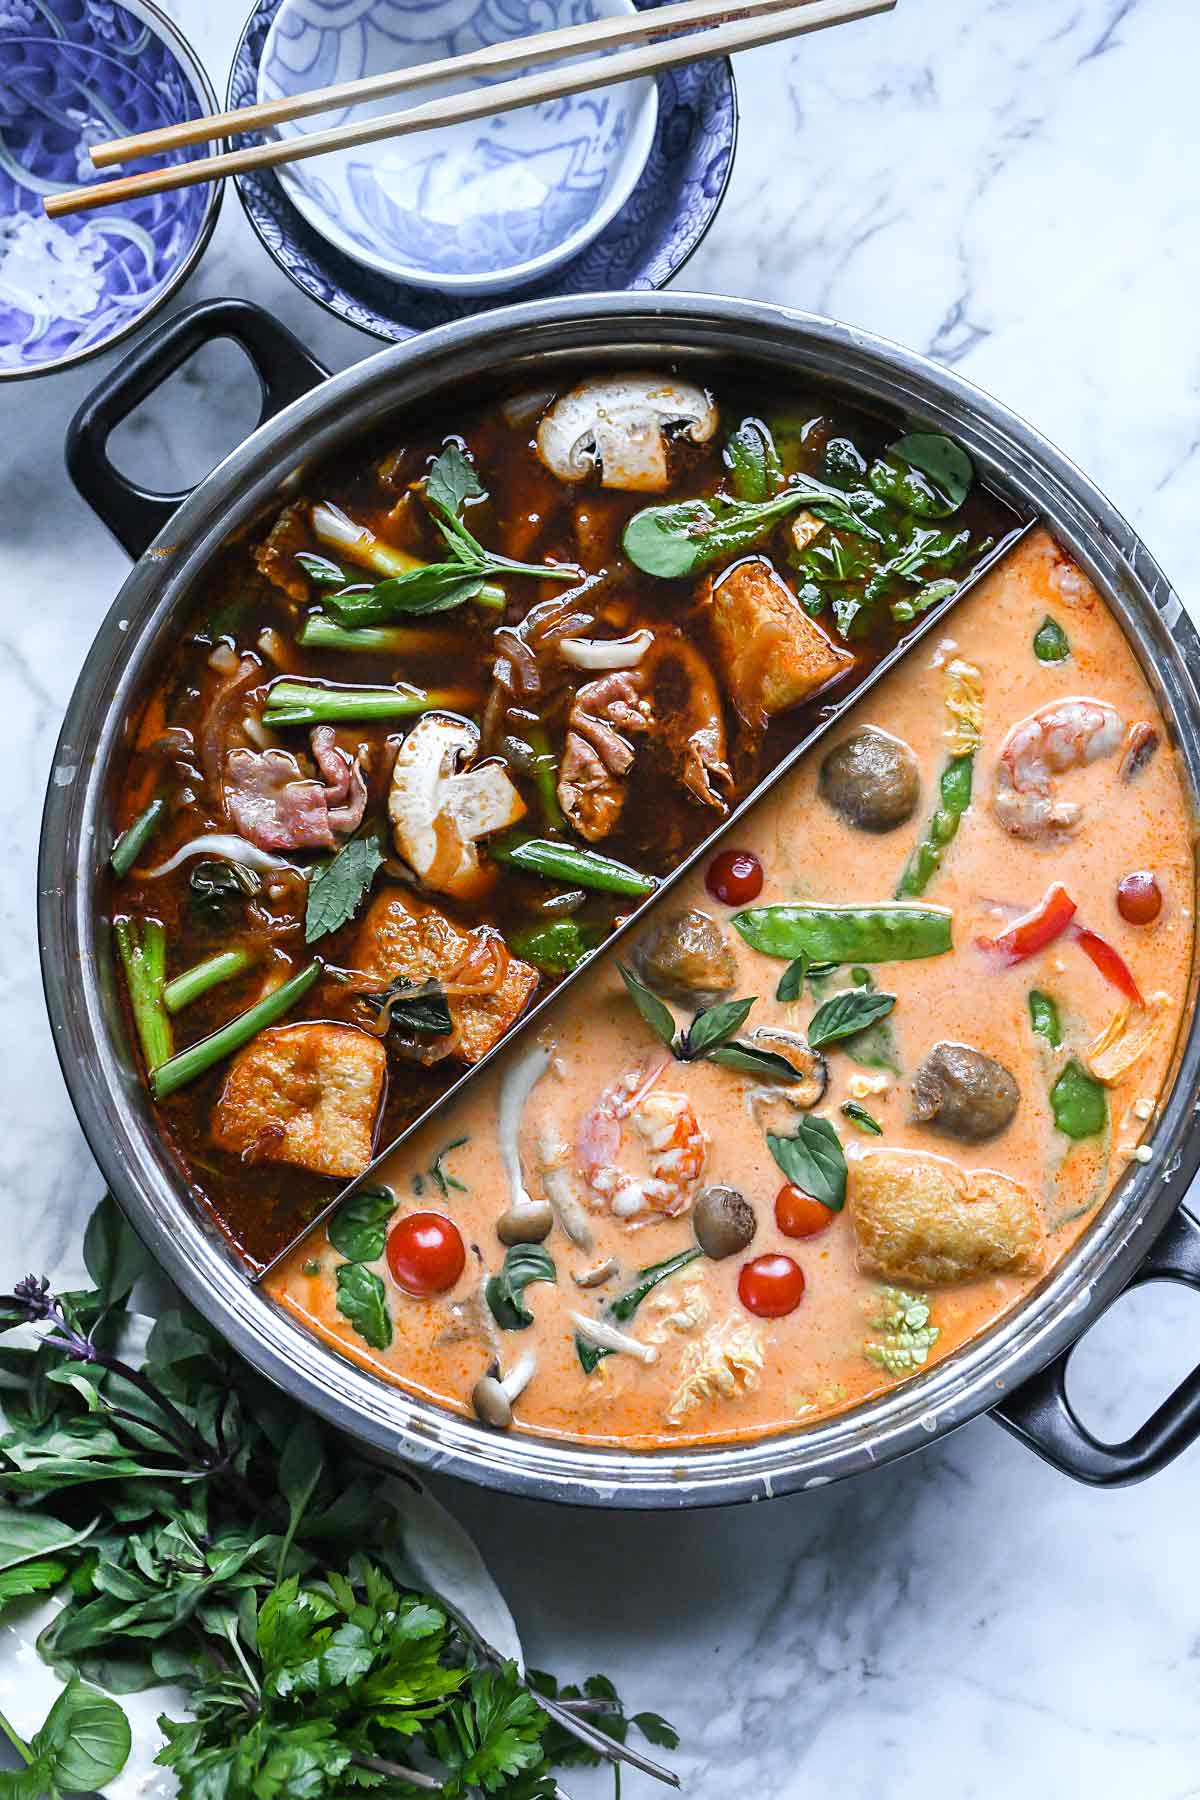 https://www.foodiecrush.com/wp-content/uploads/2018/02/Asian-Red-Curry-Hot-Pot-foodiecrush.com-047.jpg